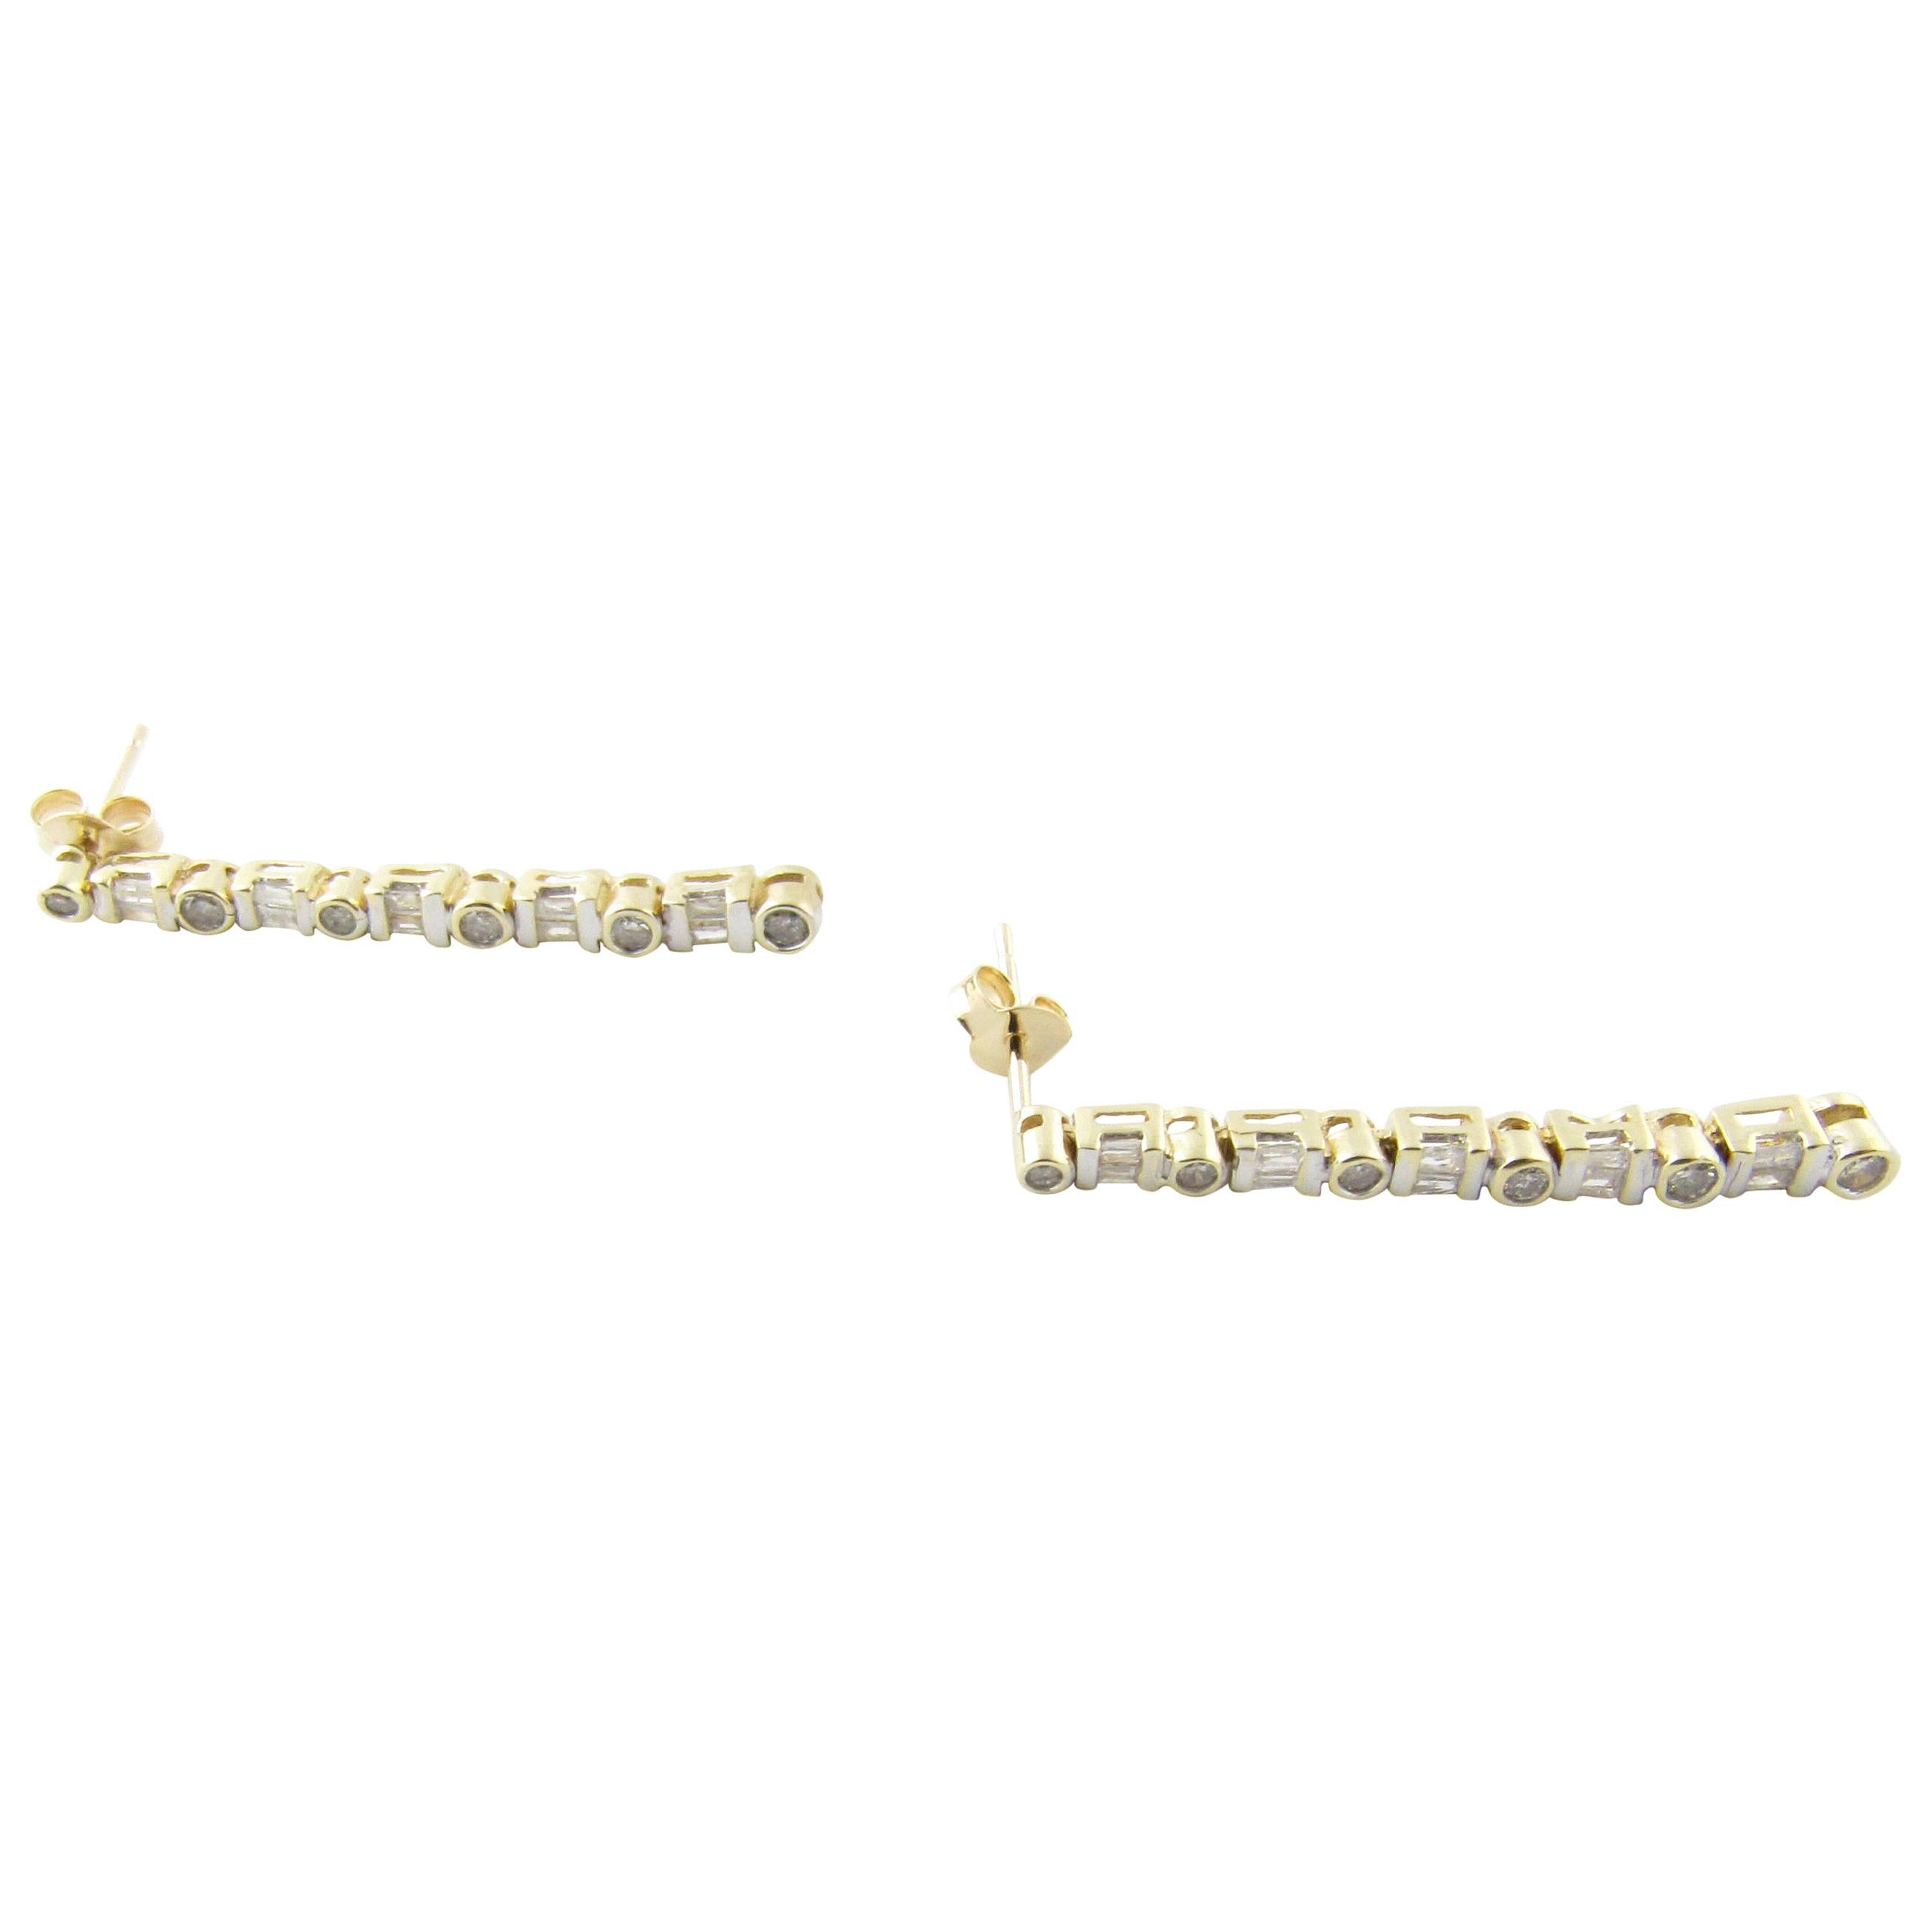 10 Karat Yellow Gold Diamond Earrings